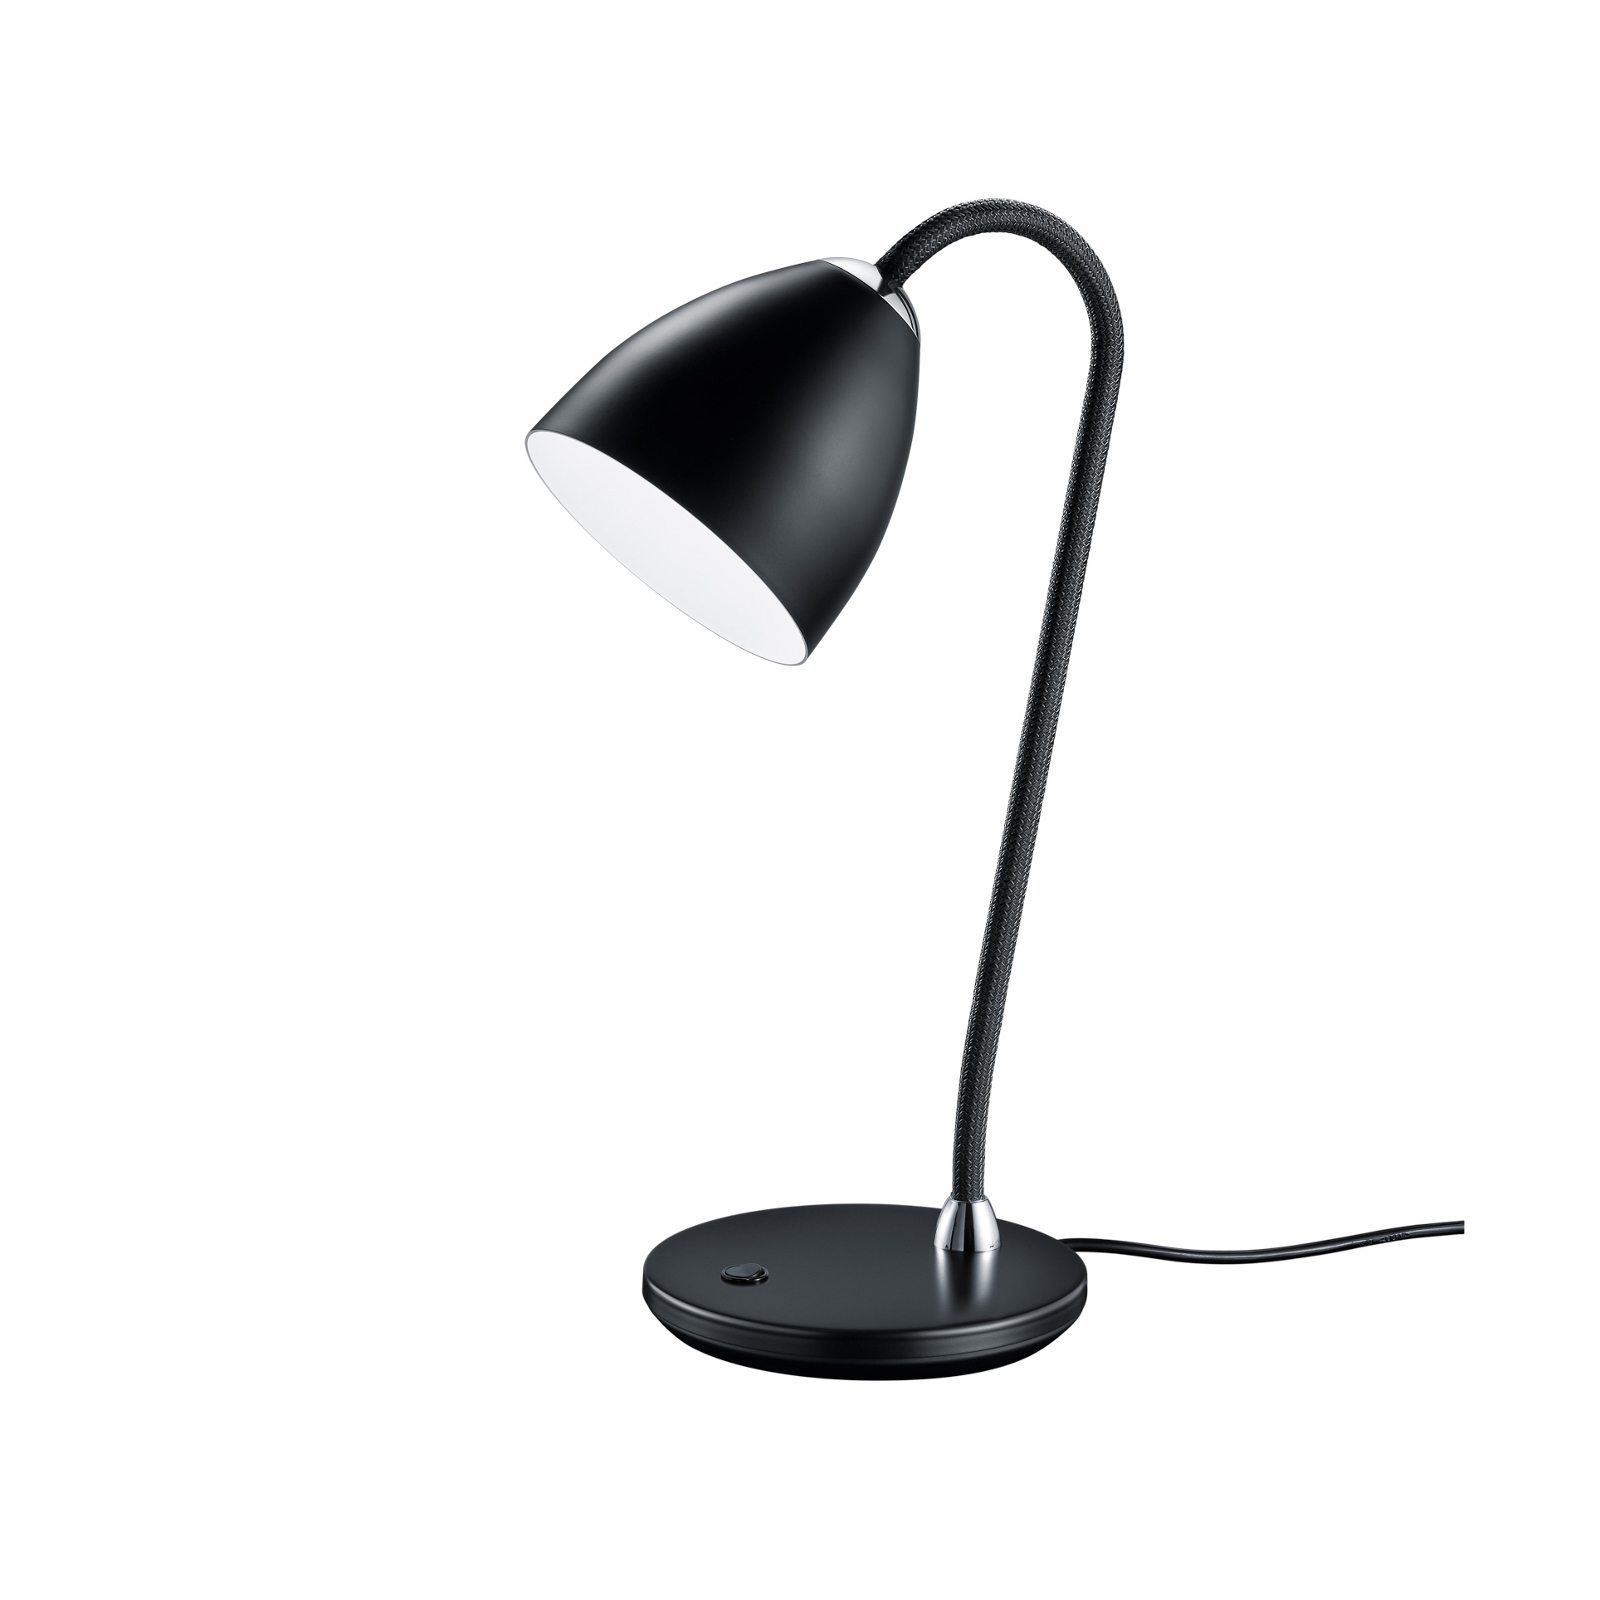 Baulmann 14.245.69 Lampe de table avec bras flexible, noir